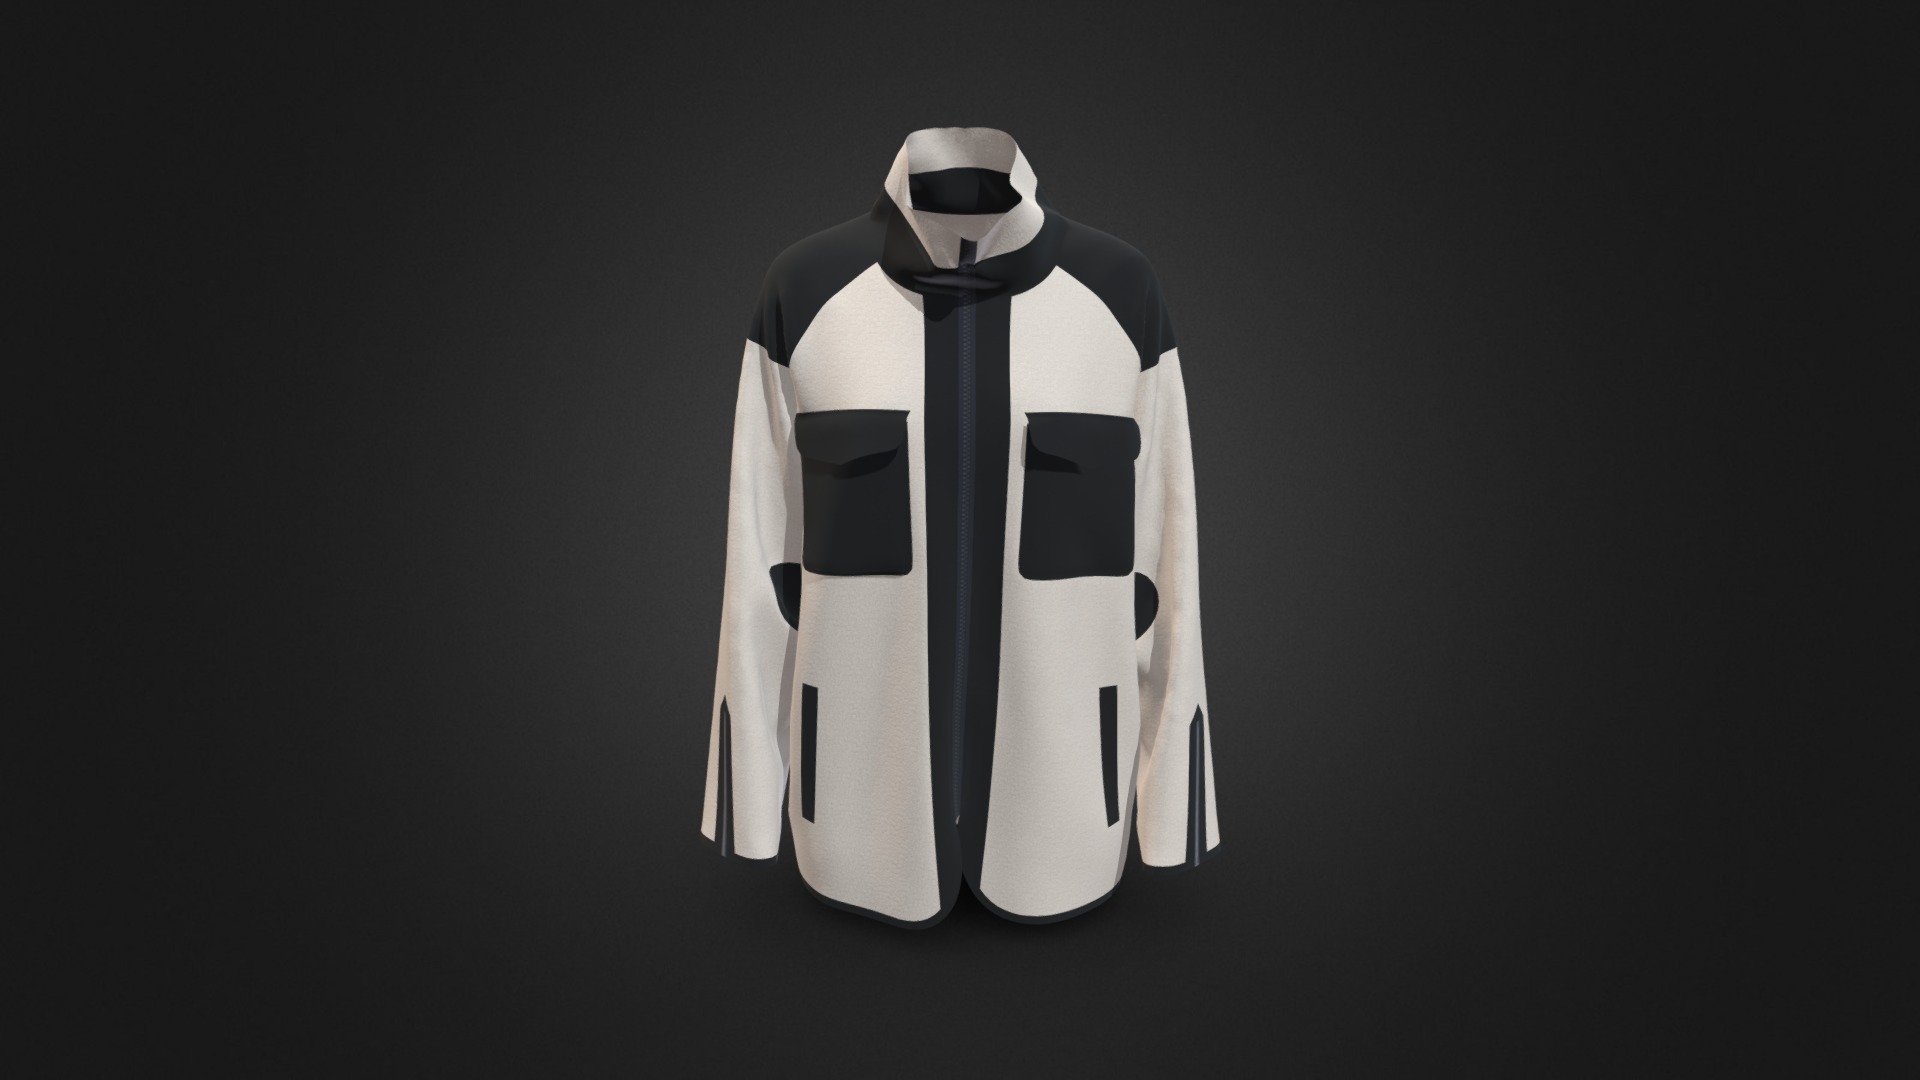 3D model Fleece Vest - This is a 3D model of the Fleece Vest. The 3D model is about a white and black shirt.